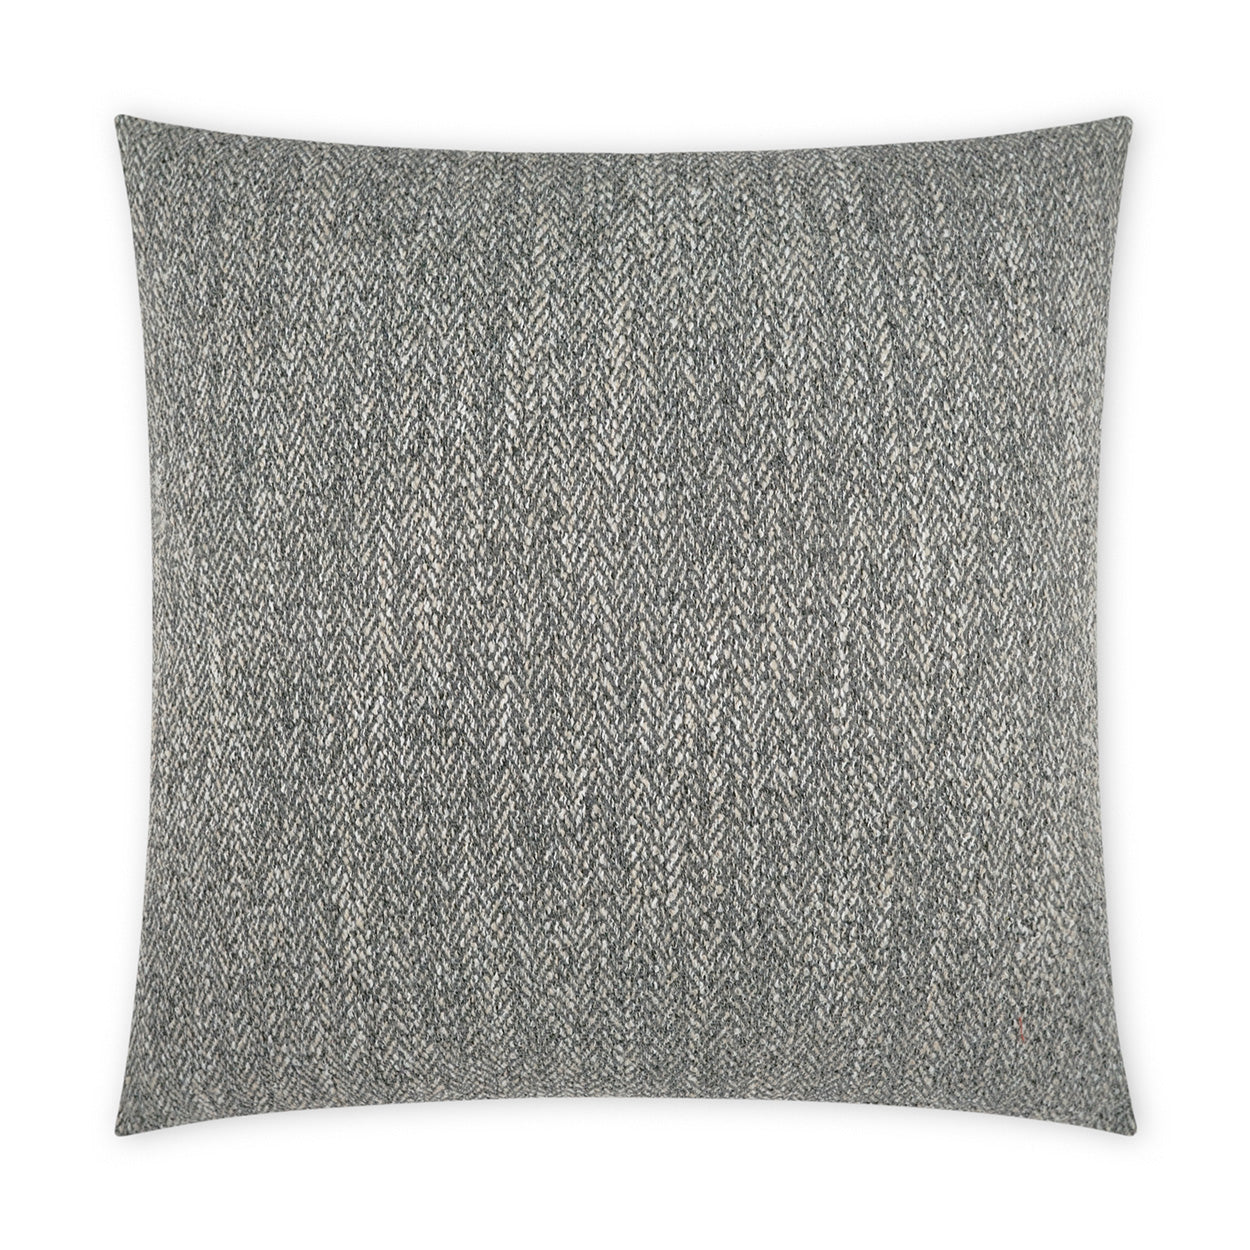 Outdoor Stratford Pillow - Grey